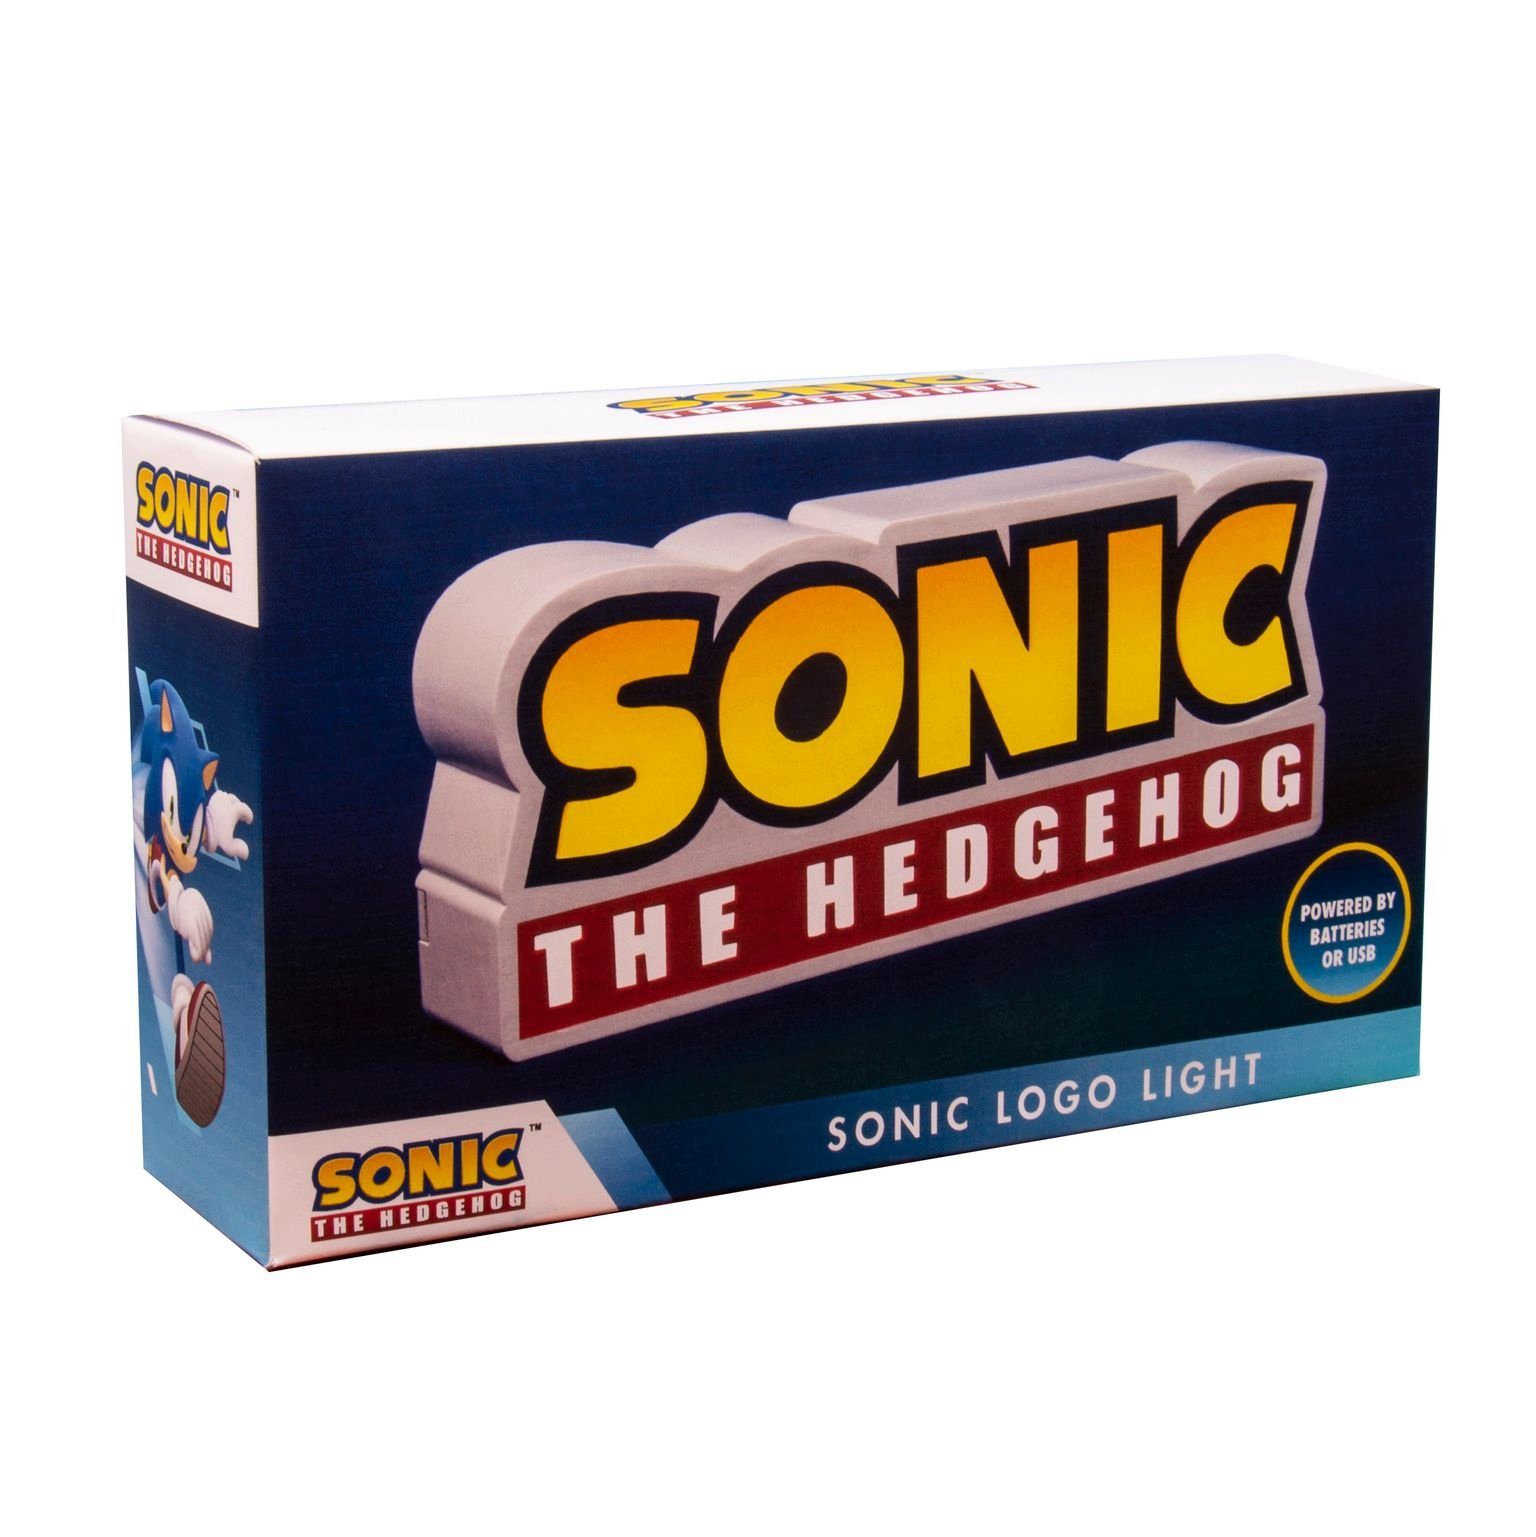 Fizz creations Nachtlicht Sonic Logo-Licht, The fest Hedgehog The integriert, Sonic Lizenziertes LED Hedgehog-Merchandise Offiziell